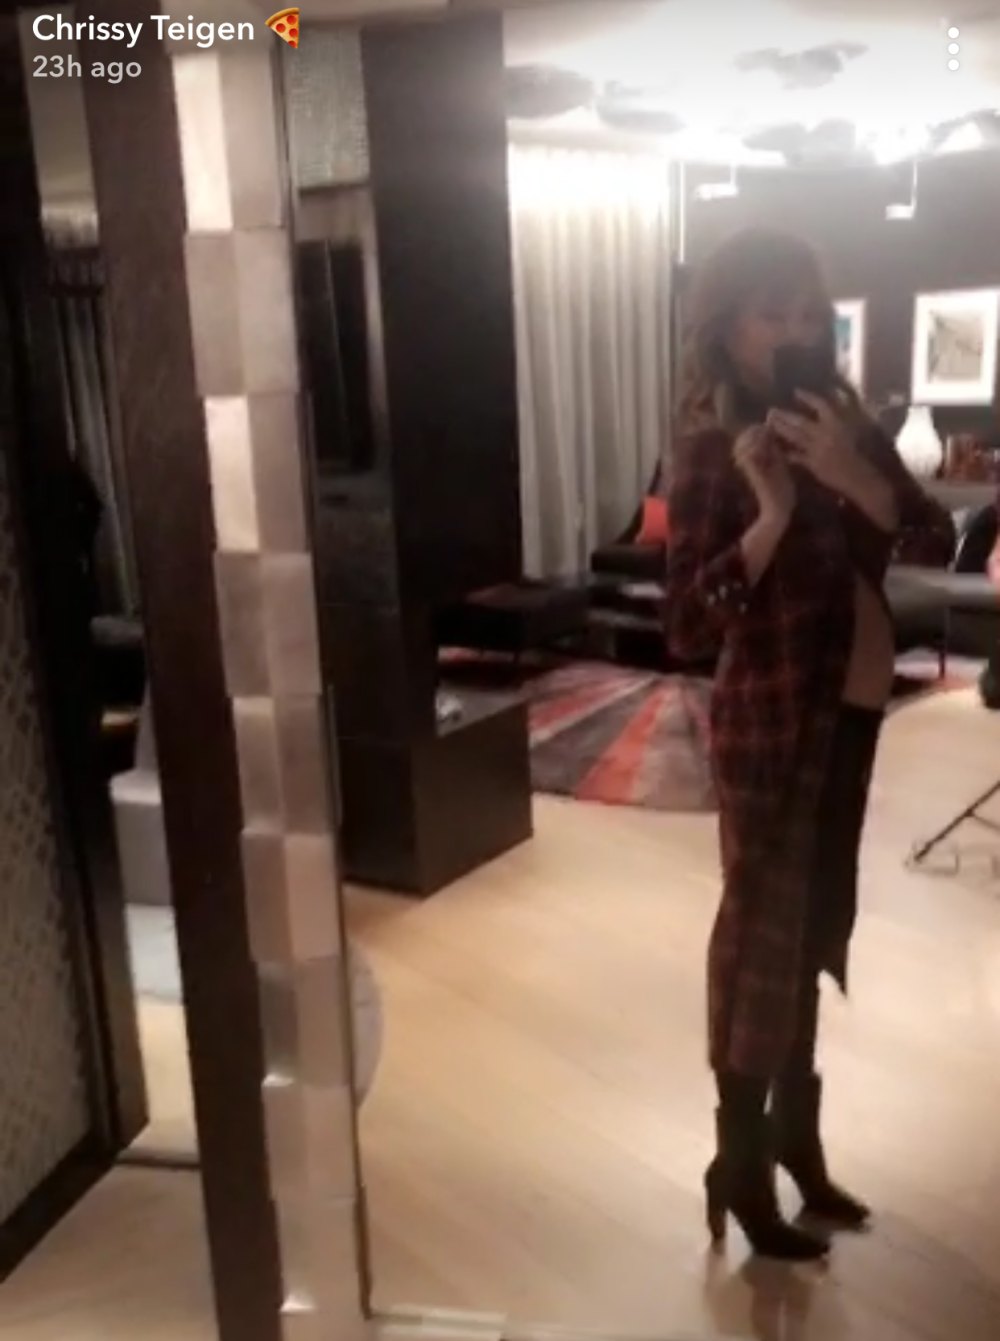 Chrissy Teigen displays her baby bump on Snapchat.